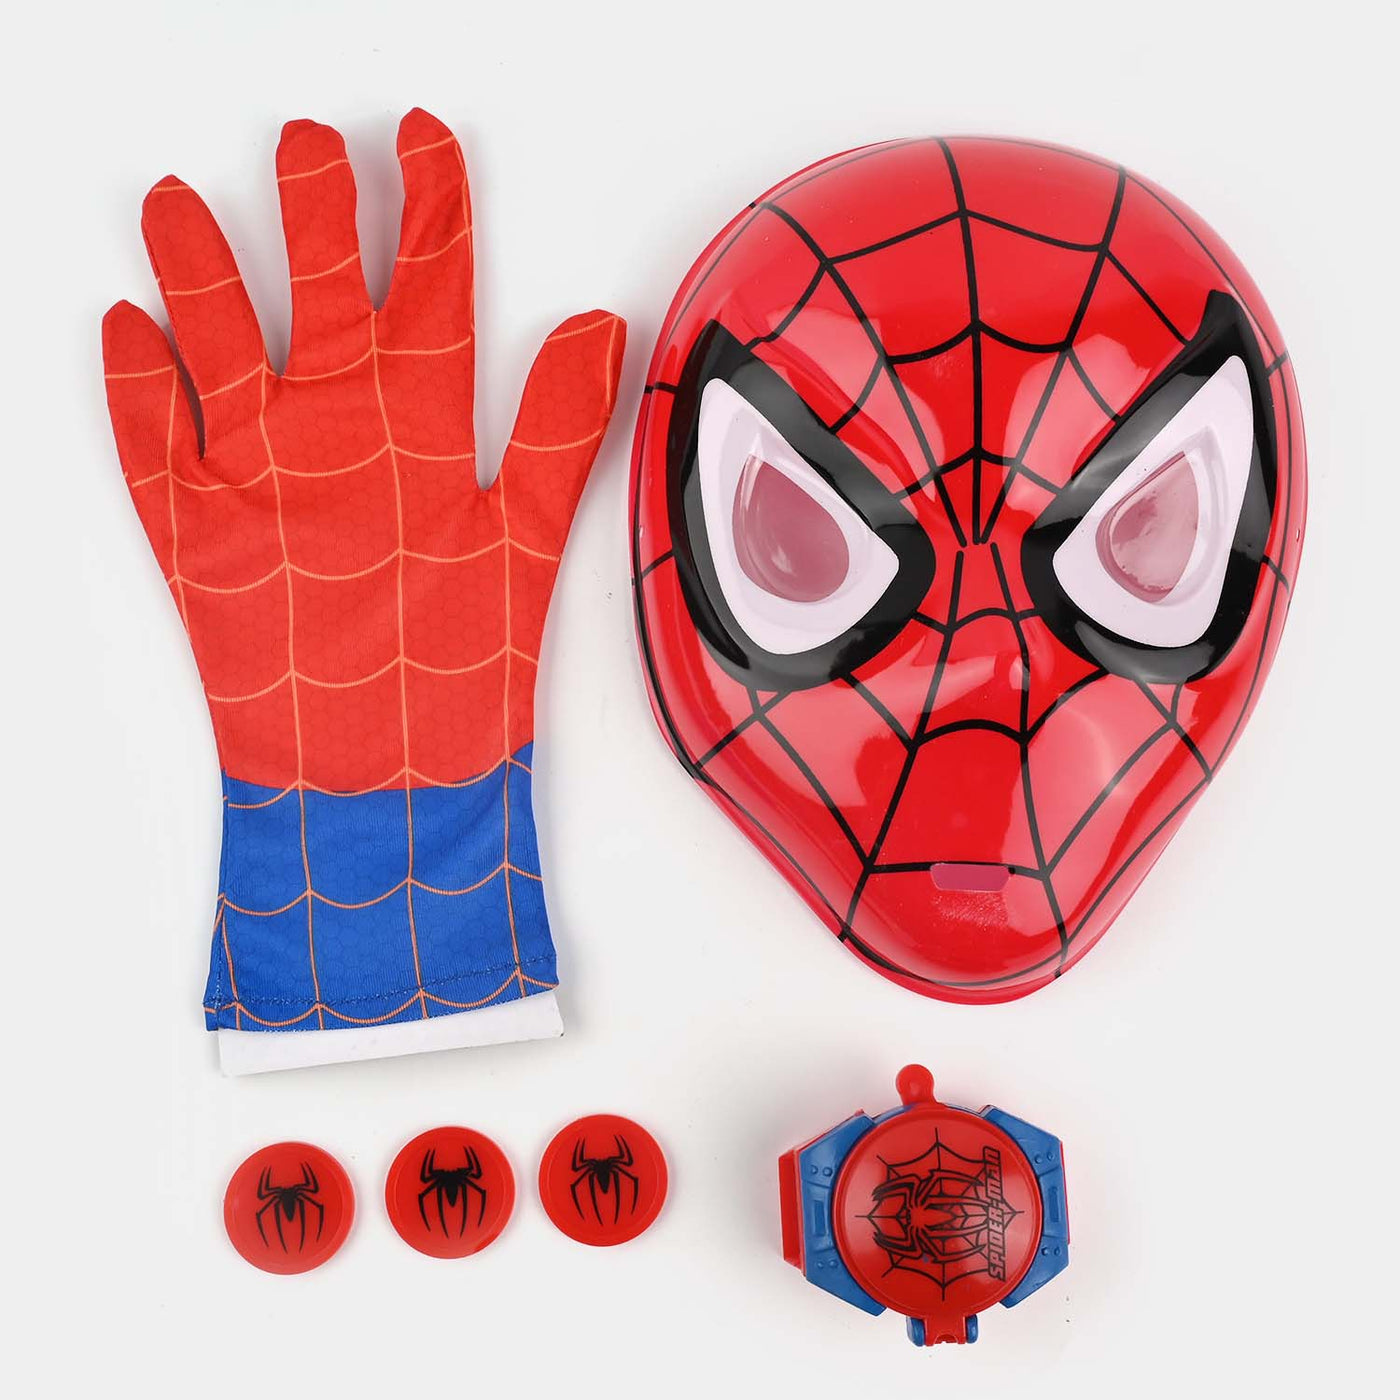 Super Action Hero Mask & Play Set For Kids